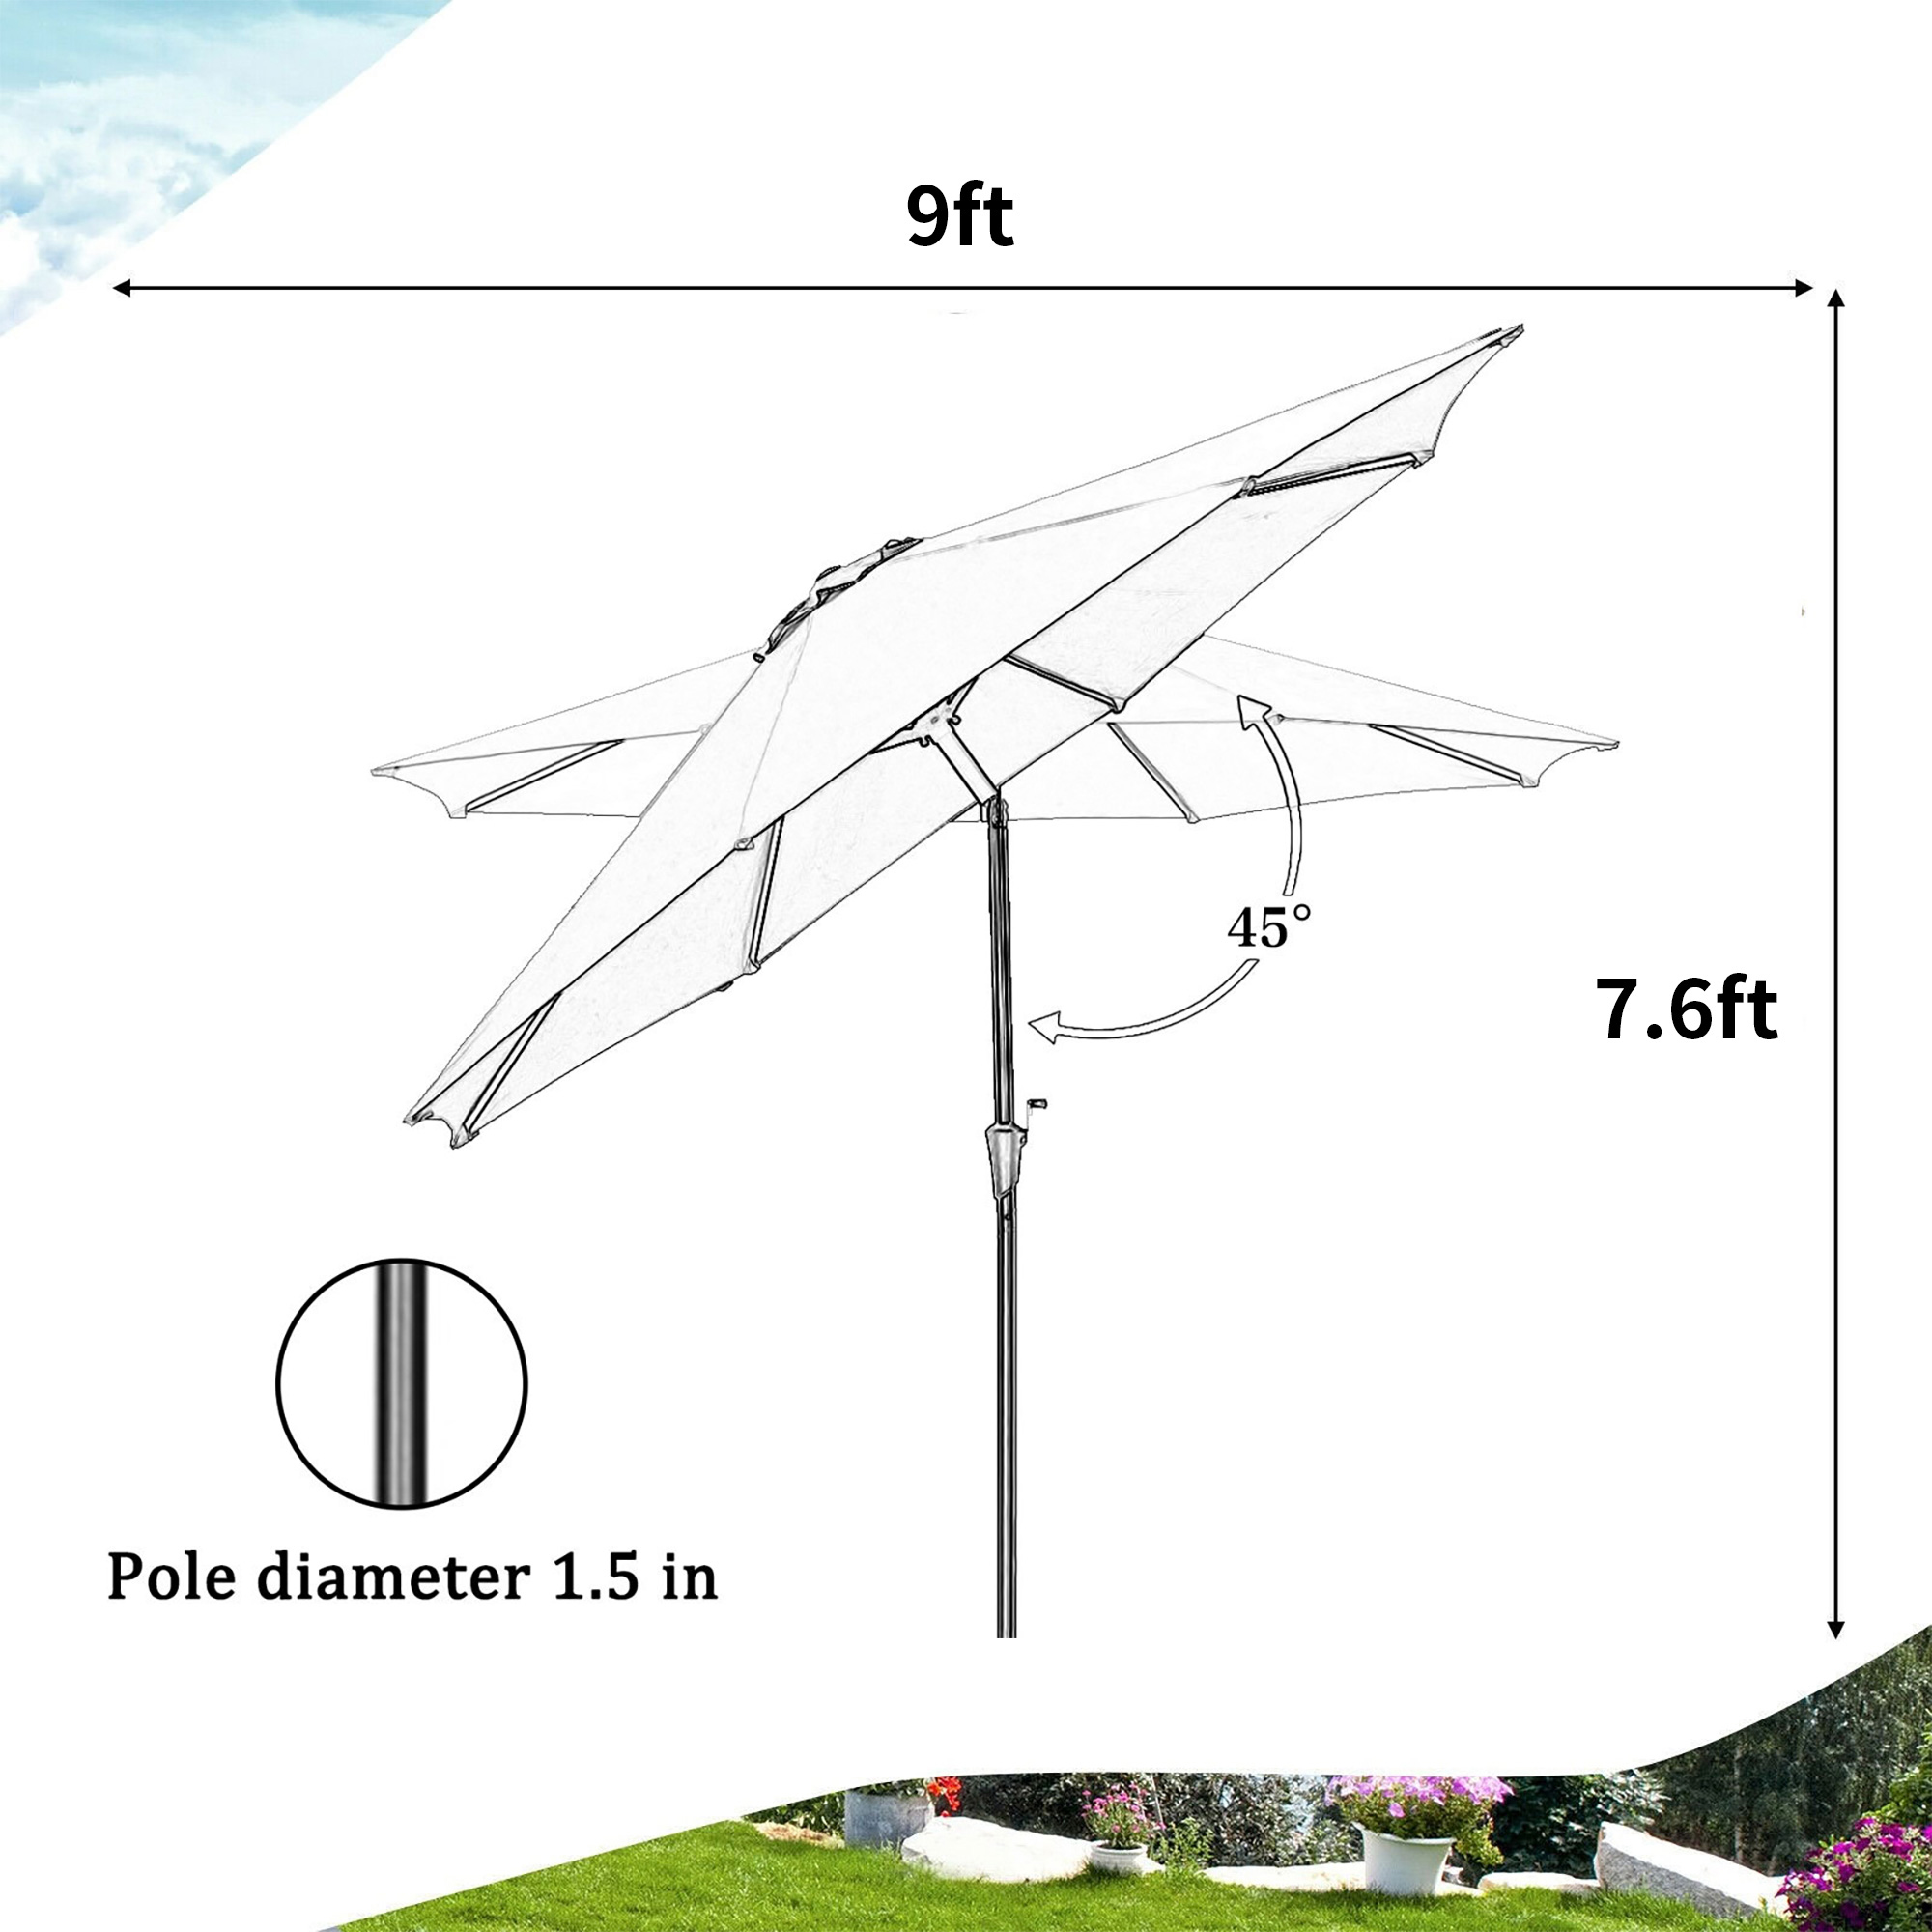 Autlaycil 9ft Outdoor Patio Umbrellass 6 Ribs w/ Tilt & Crank Patio Table Umbrella-Khaki - image 2 of 6